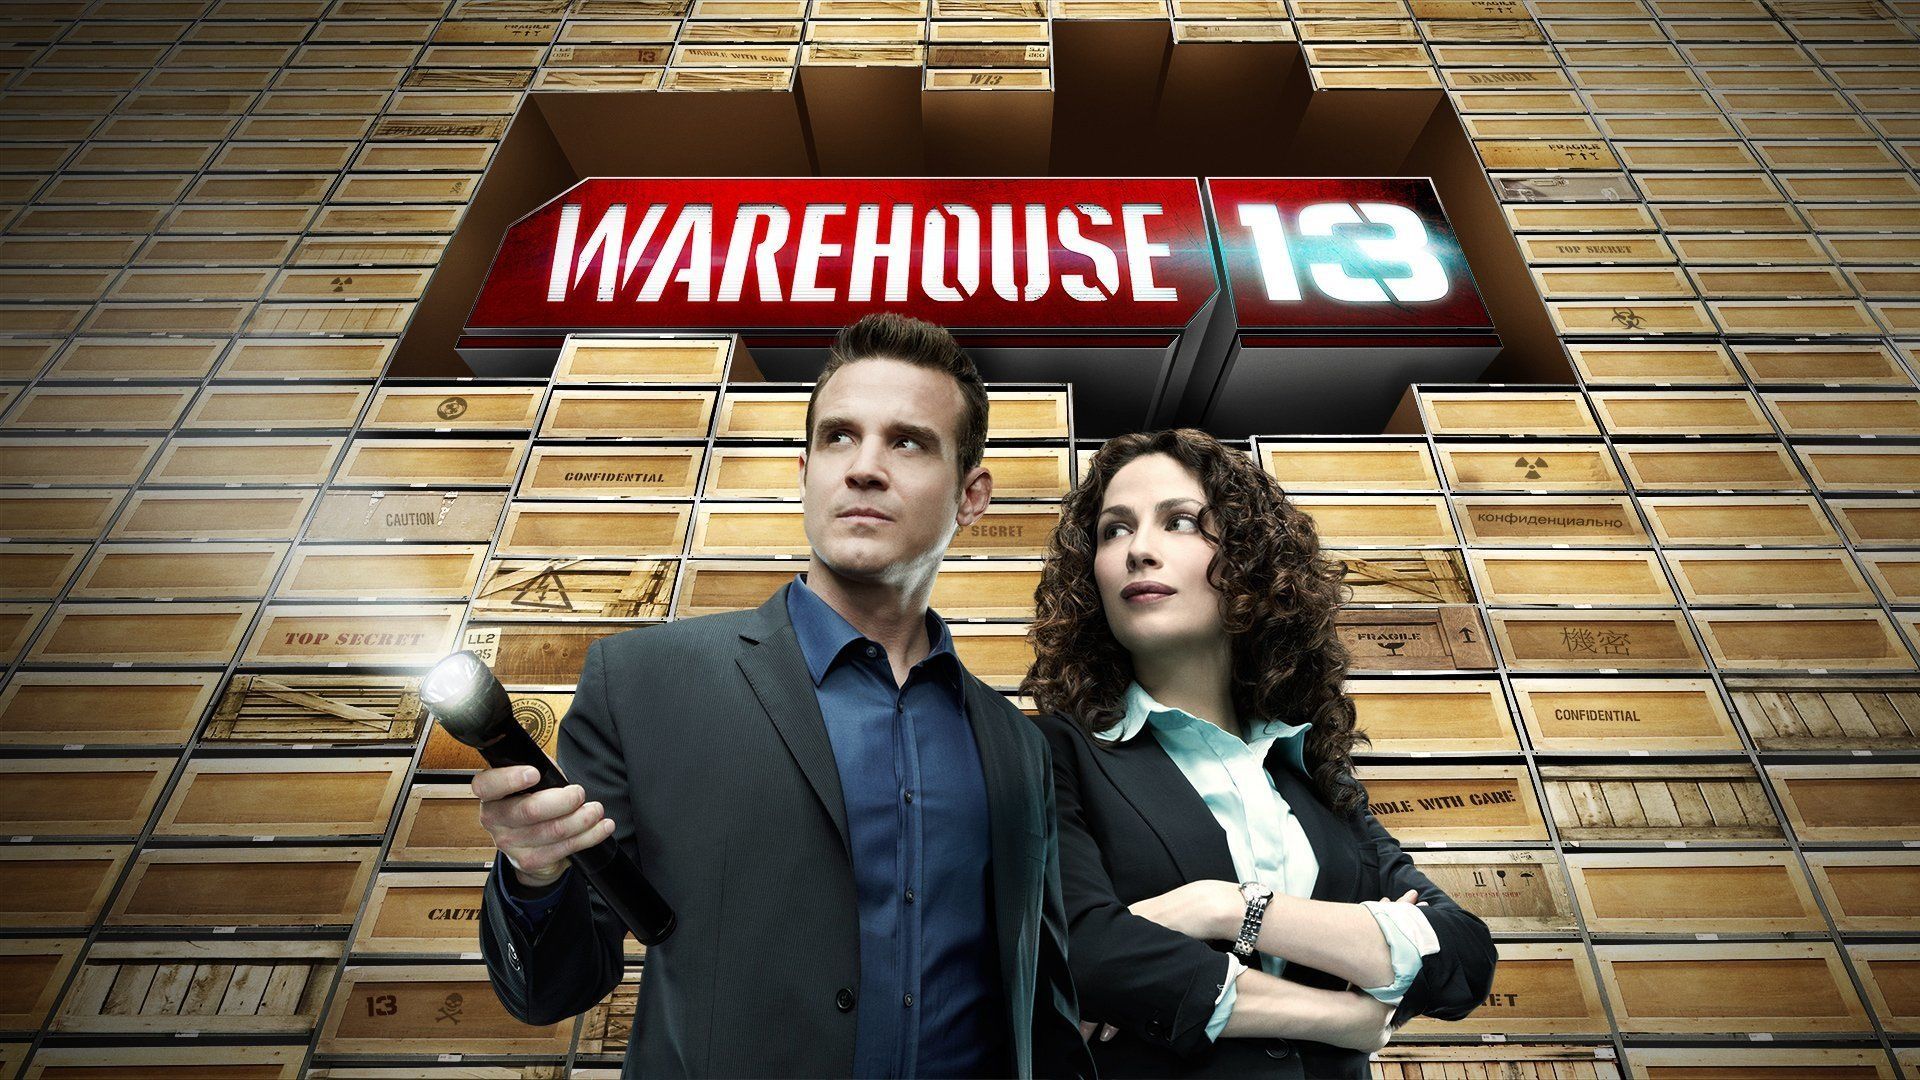 Warehouse 13 Wallpaper Free .wallpaperaccess.com